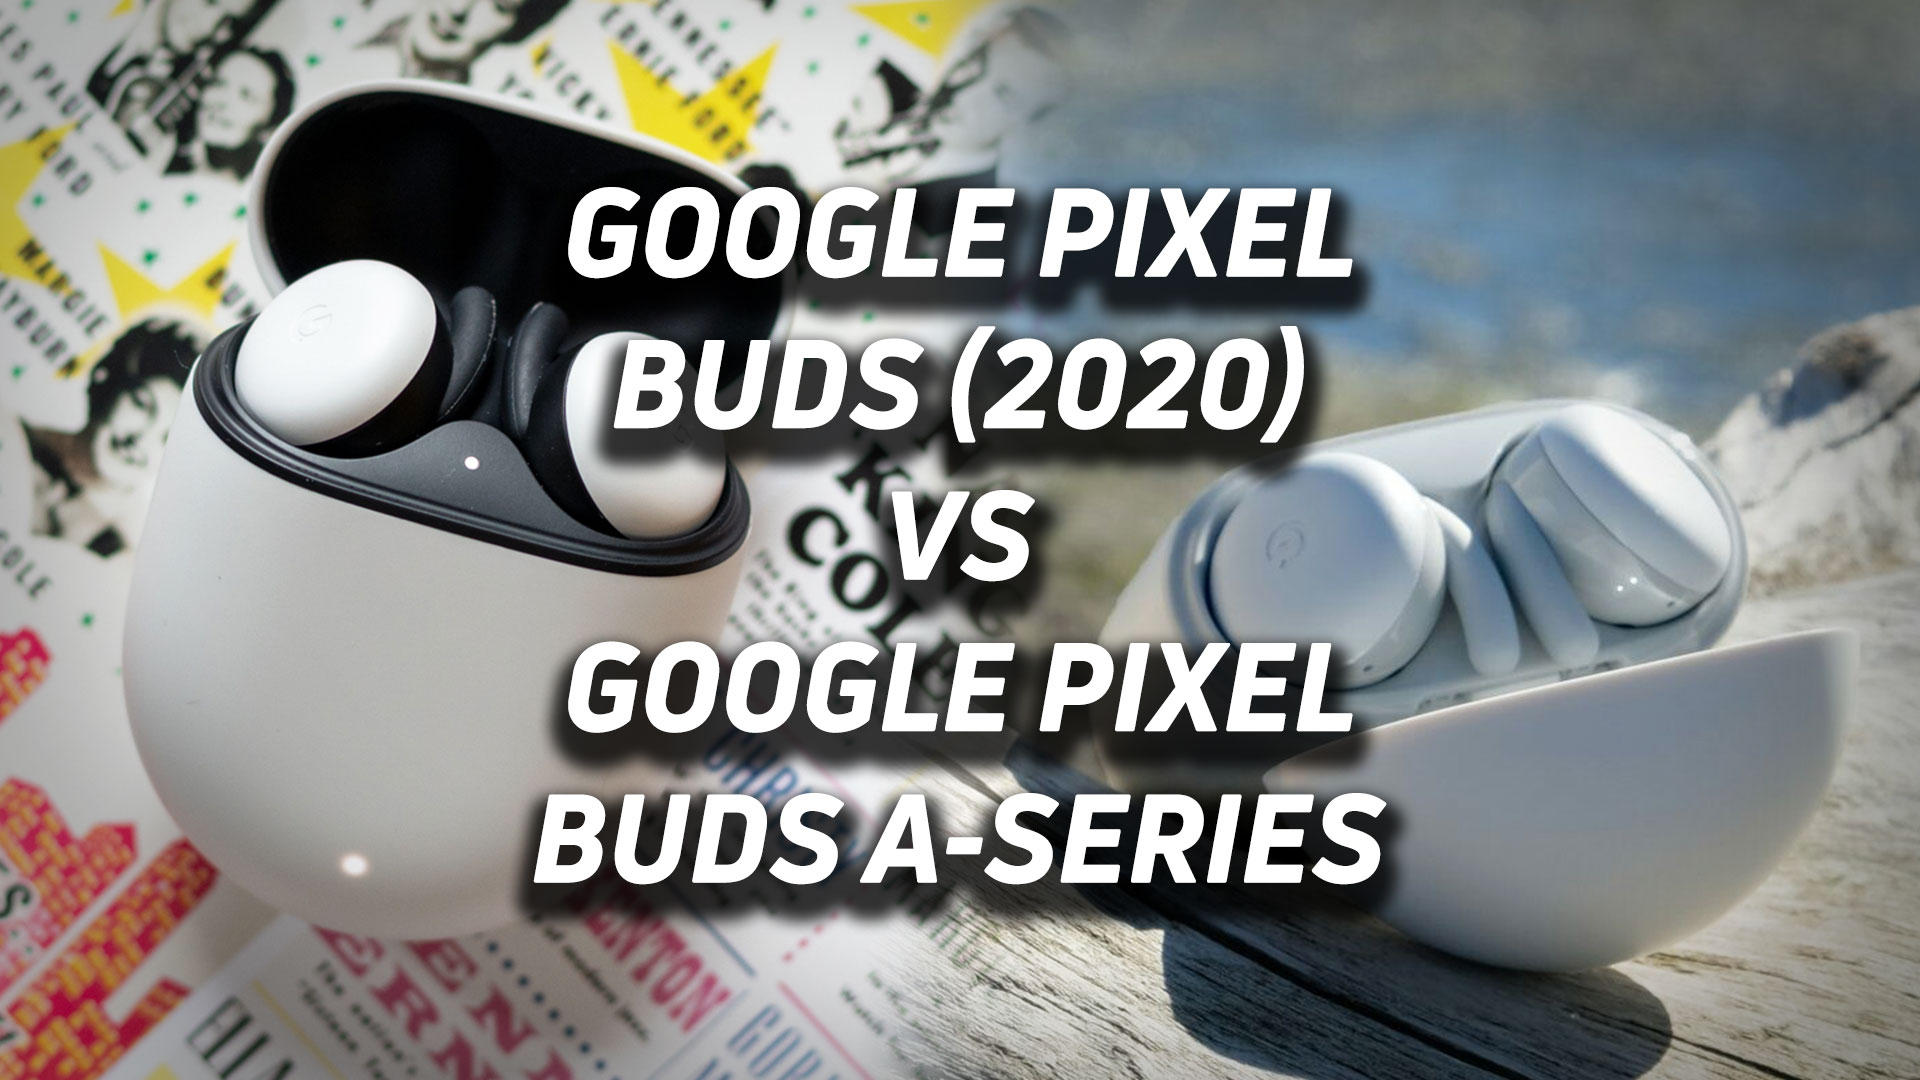 Google Pixel Buds A-Series vs Google Pixel Buds (2020) - SoundGuys